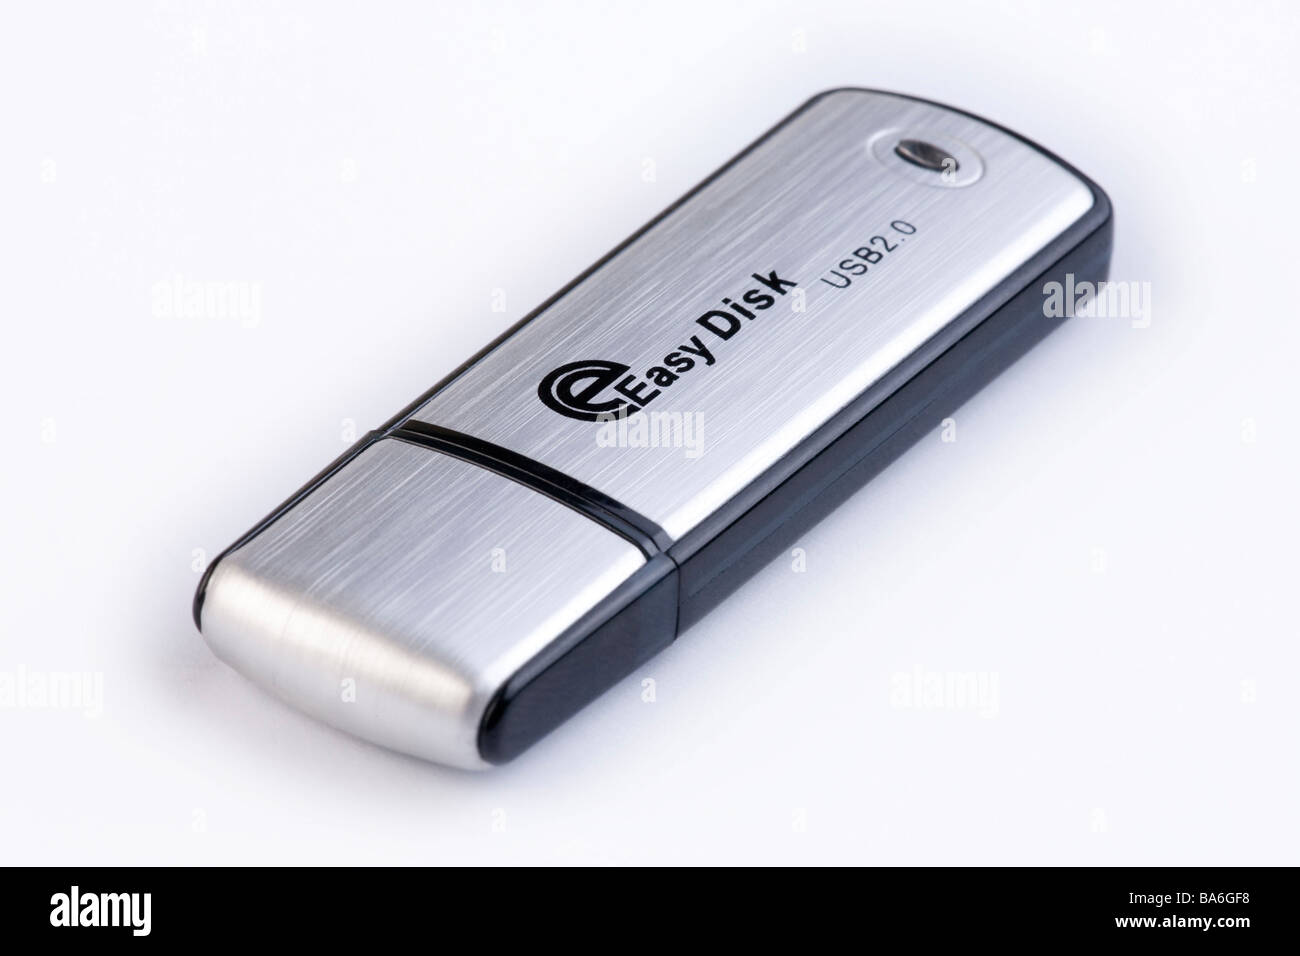 USB memory stick portable storage device Stock Photo